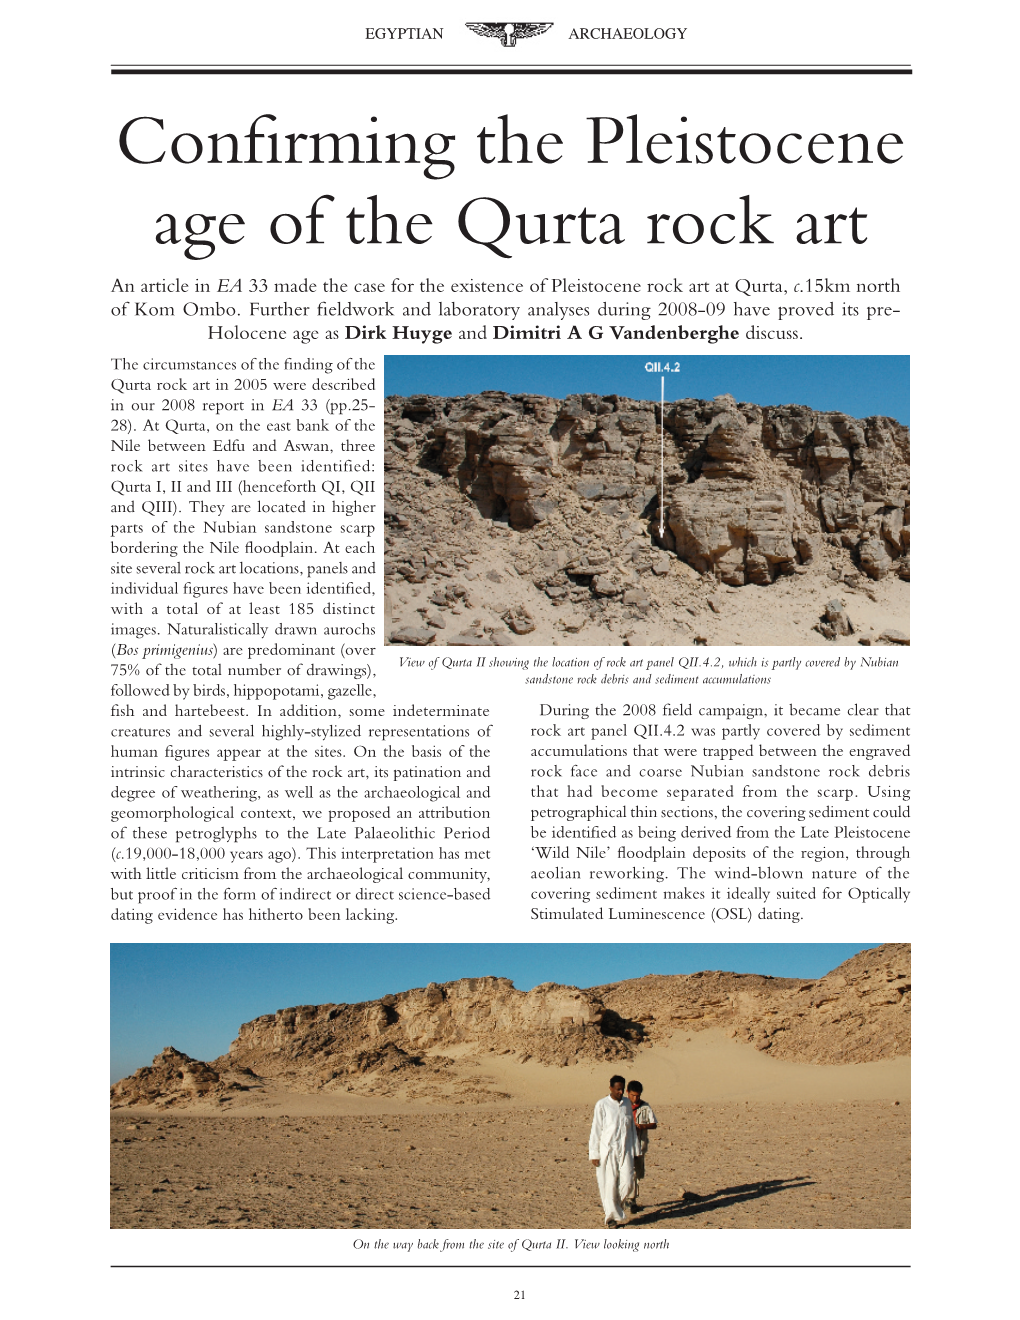 Confirming the Pleistocene Age of the Qurta Rock